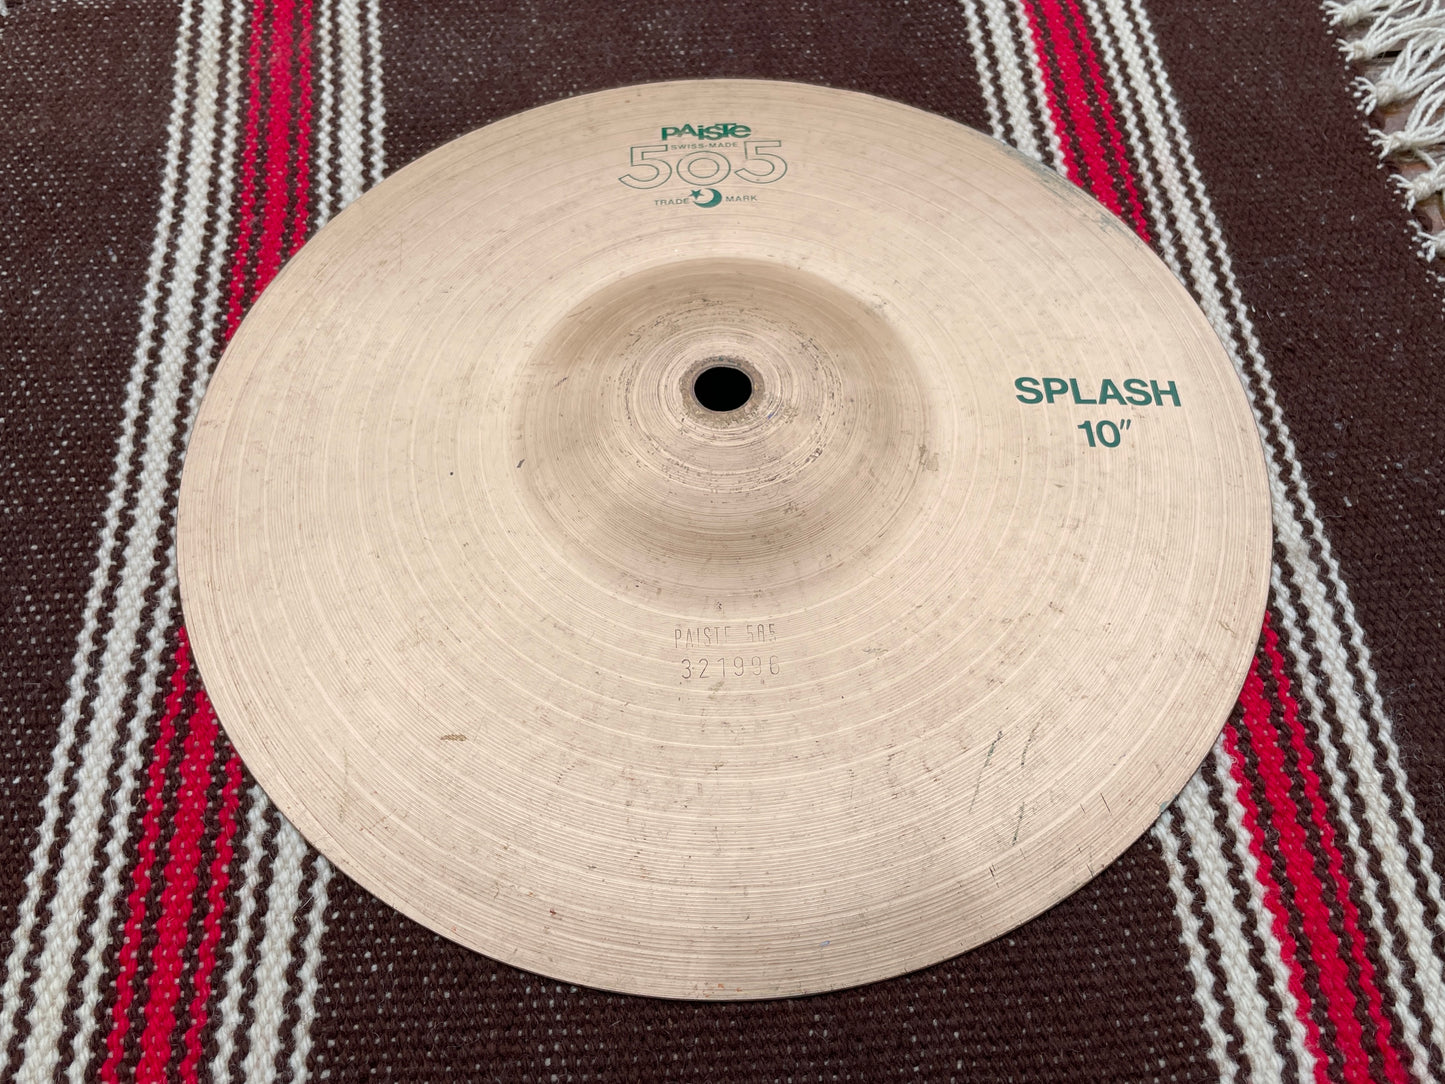 10" Paiste 505 1980s Splash Cymbal 302g Green Label  Swiss Made